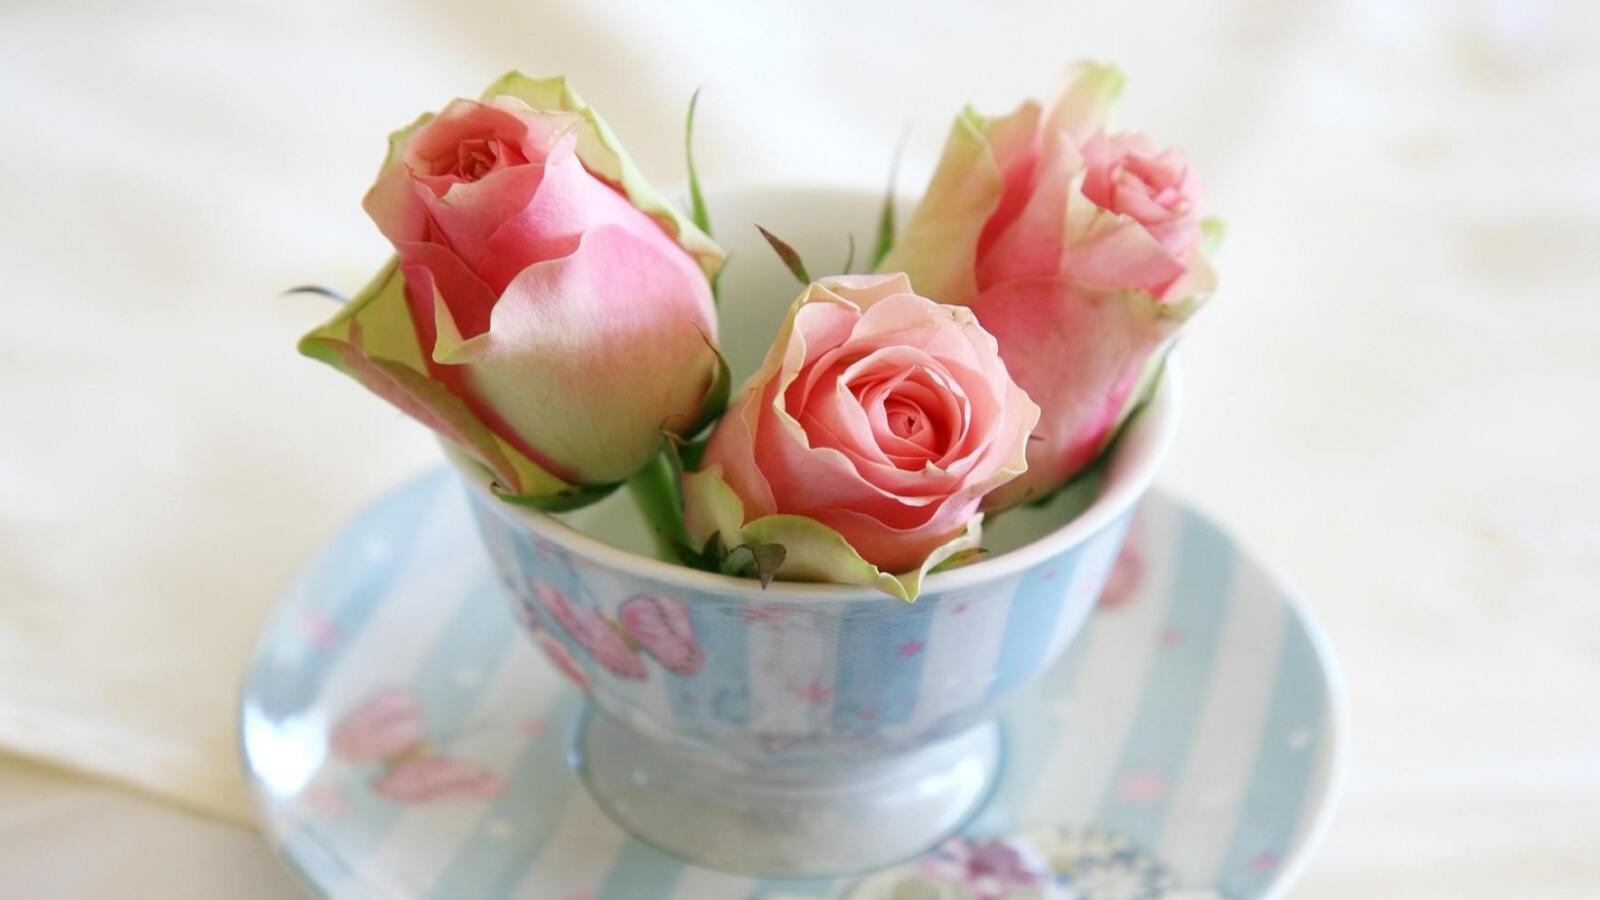 Обои cvety чашка rozy на рабочий стол